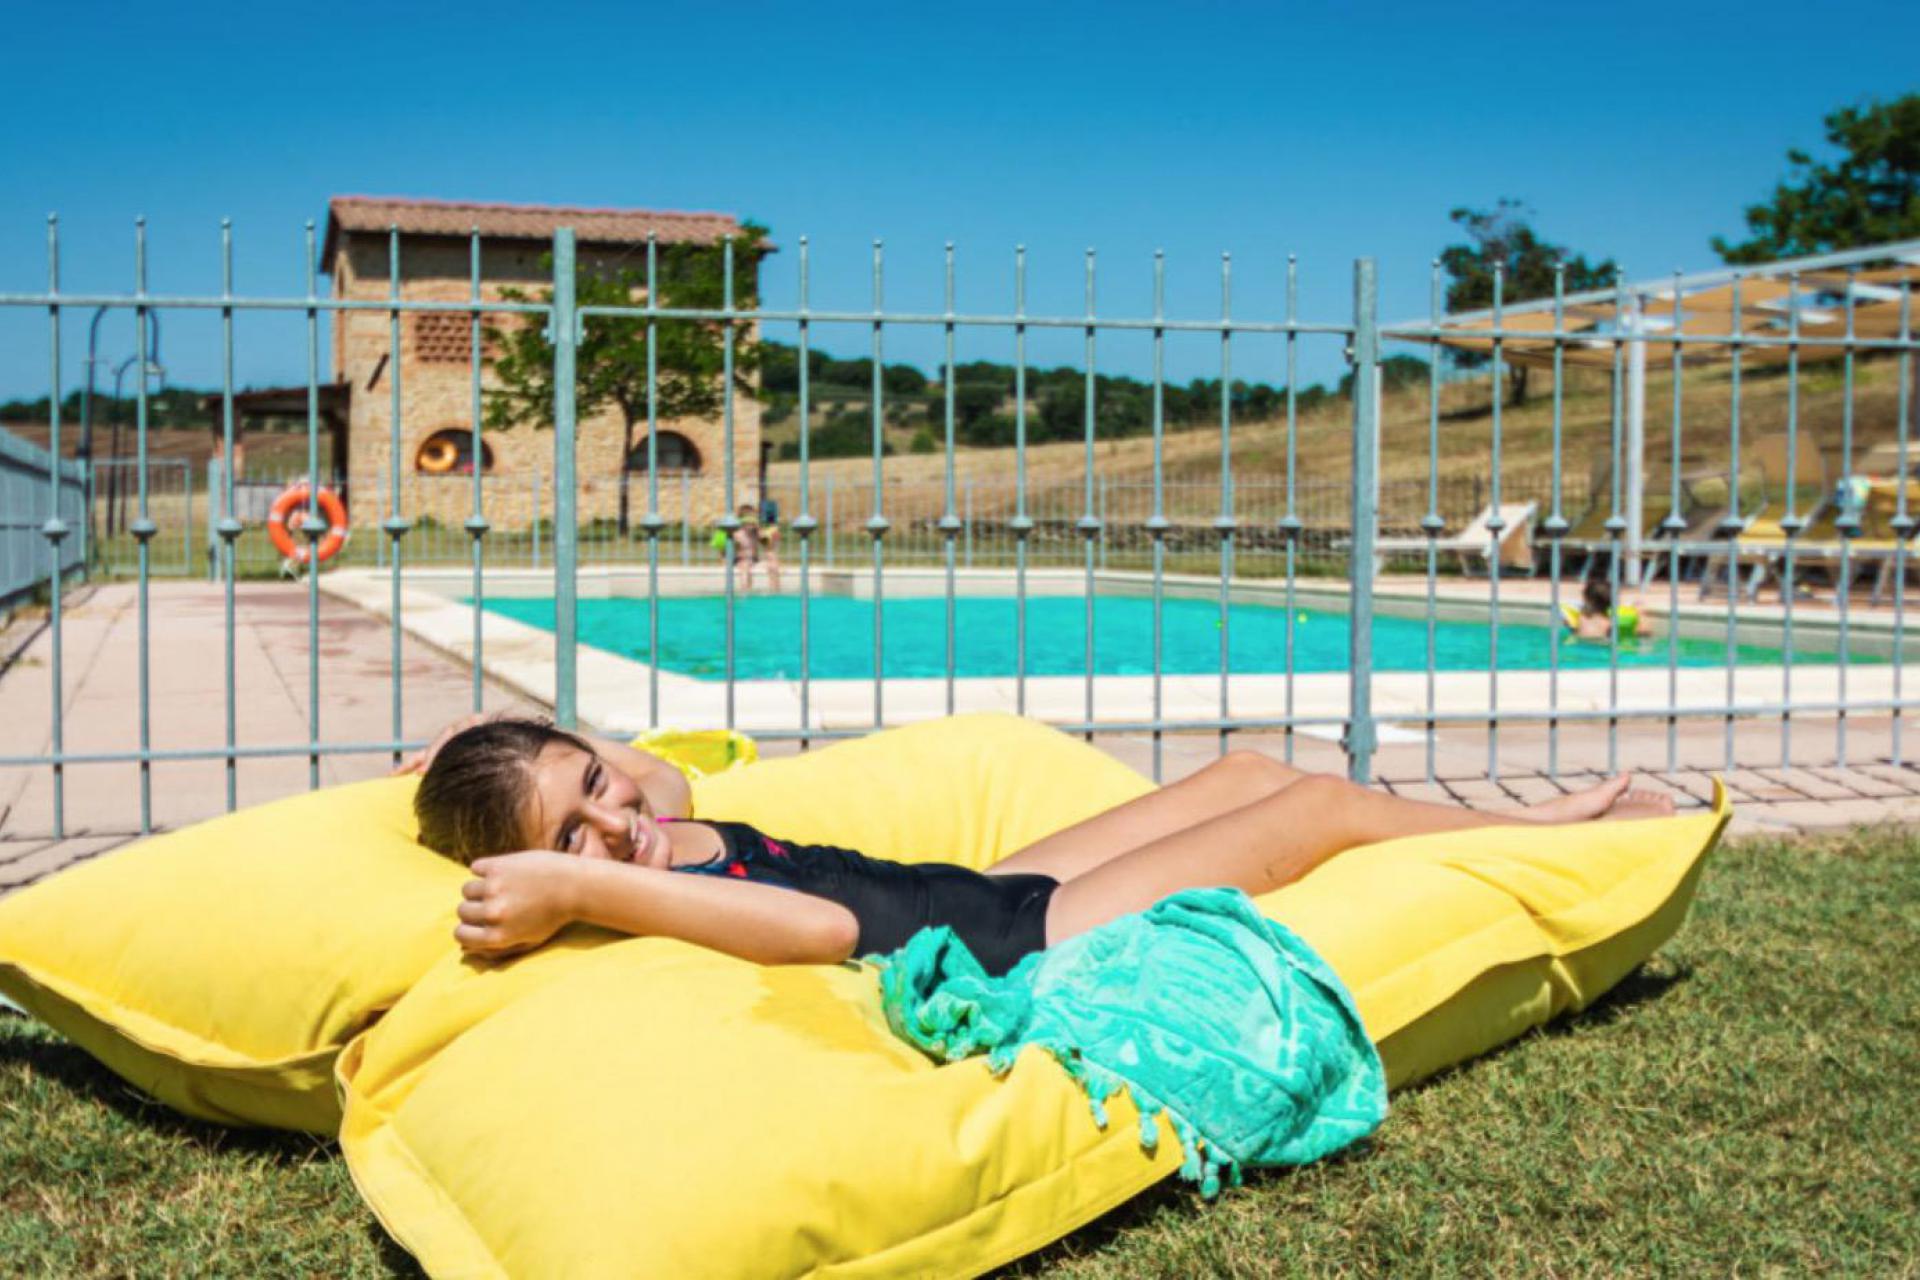 Agriturismo Toscane Centraal gelegen agriturismo met verwarmd zwembad